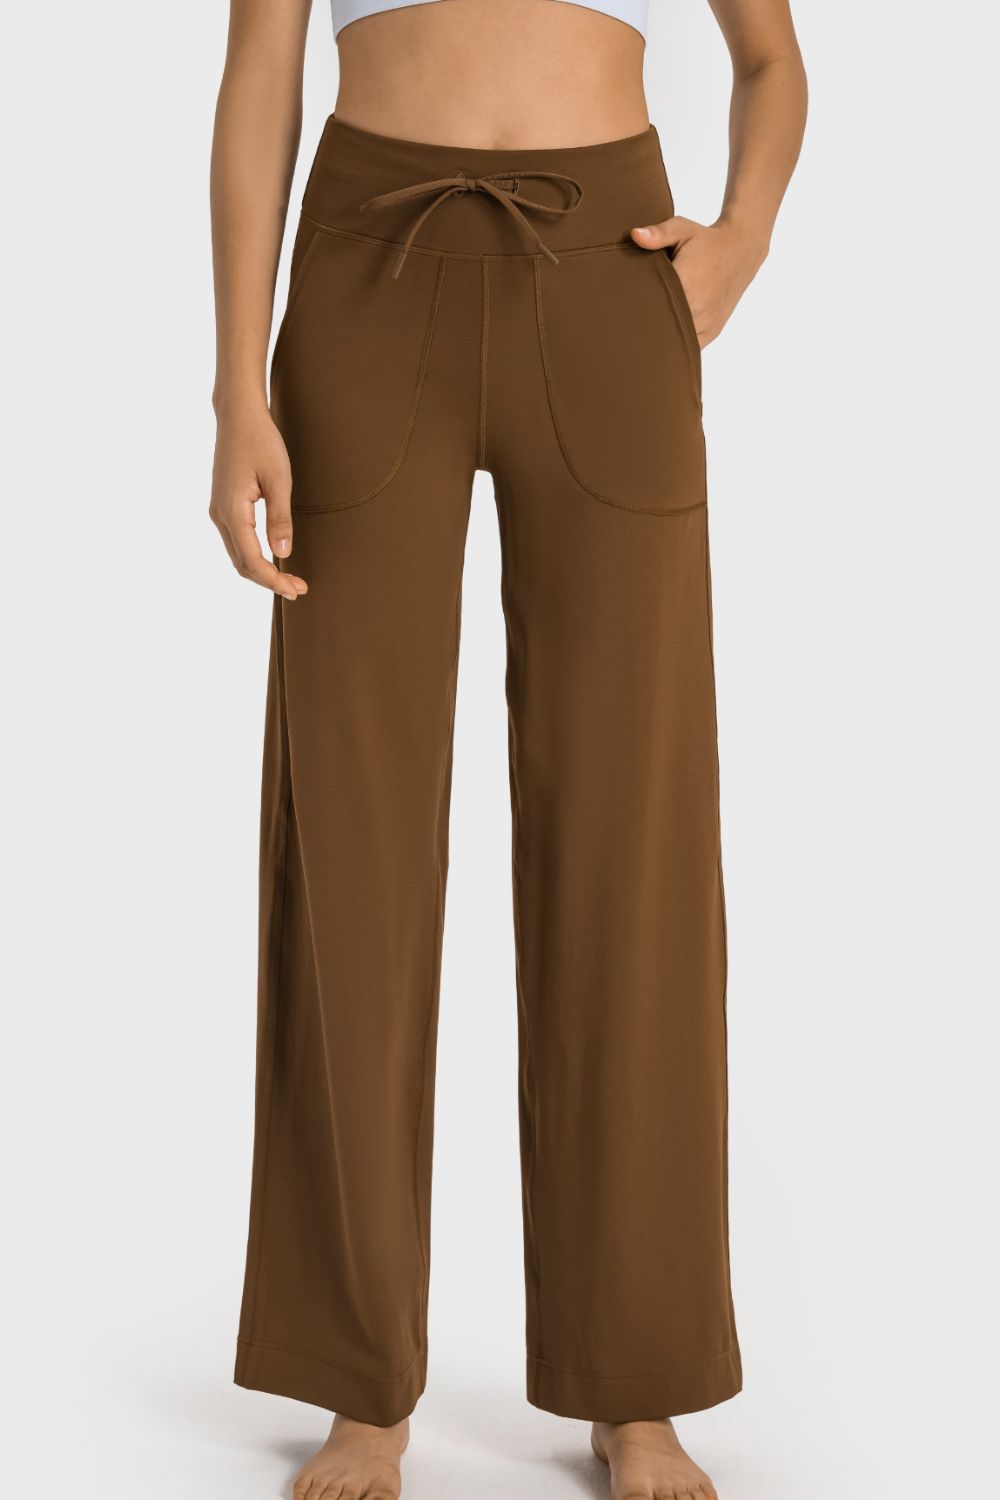 Drawstring Waist Wide Leg Sports Pants with Pockets - DromedarShop.com Online Boutique